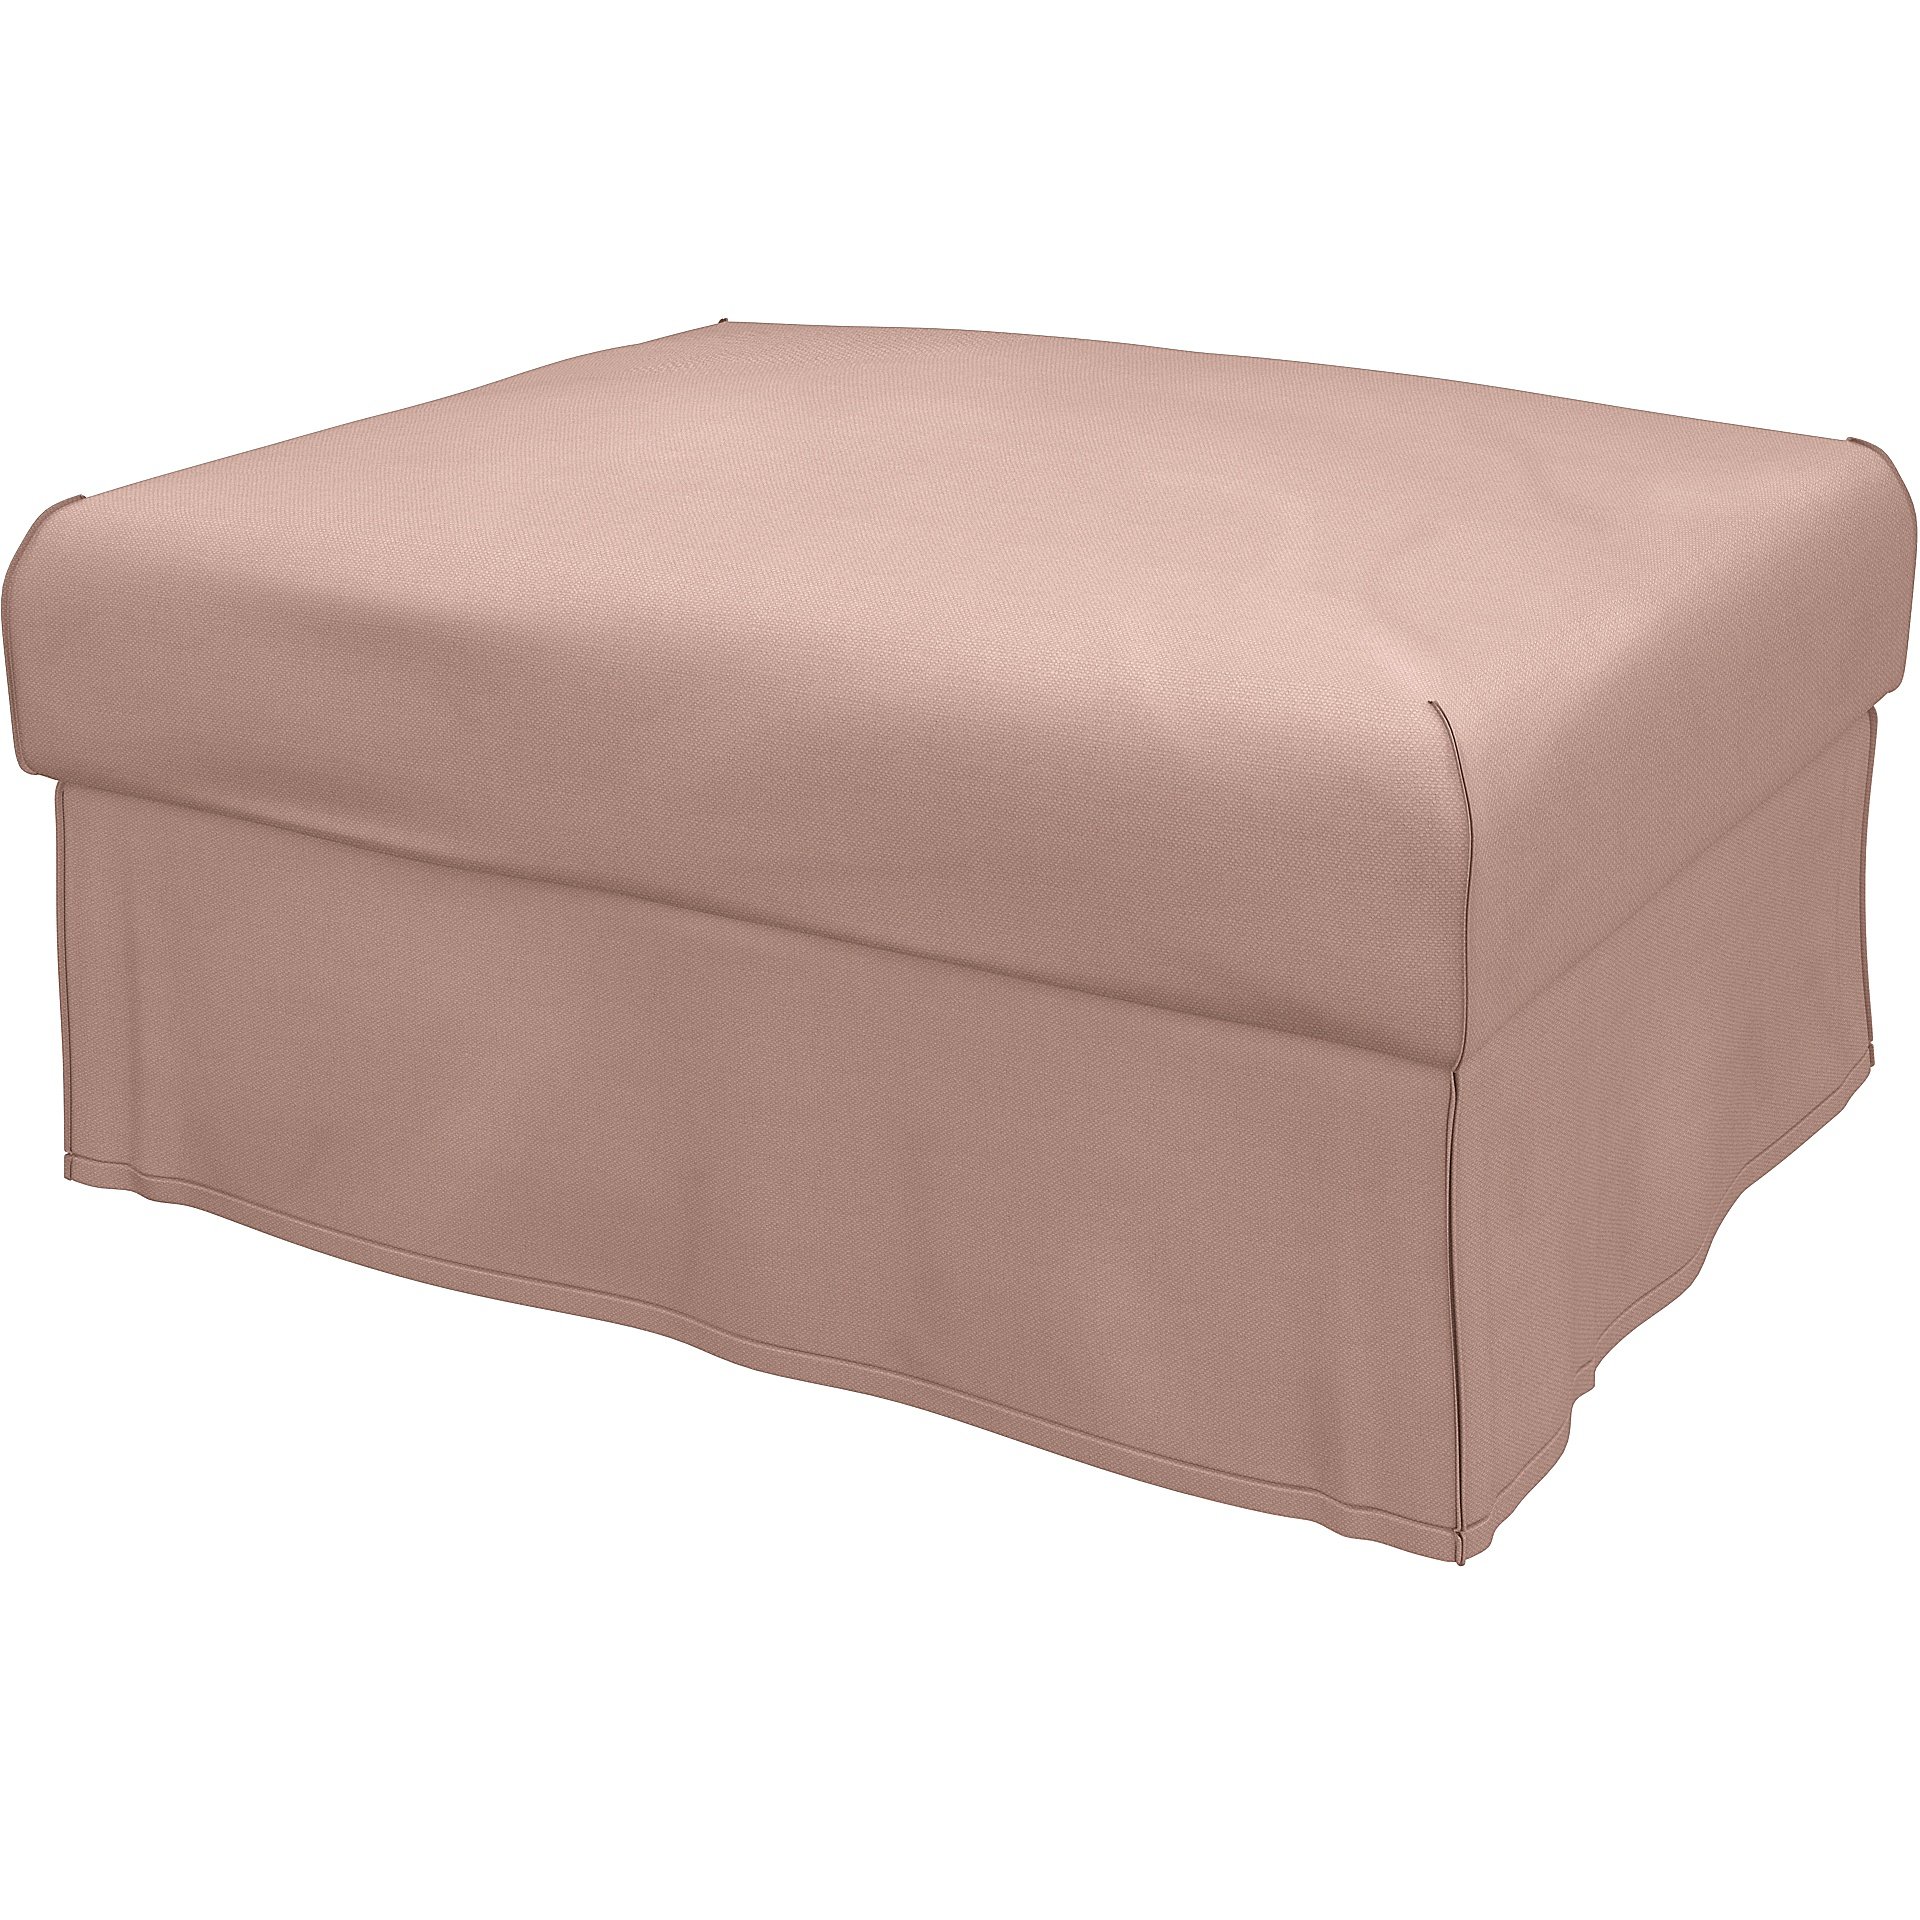 IKEA - Vimle footstool cover, Blush, Linen - Bemz